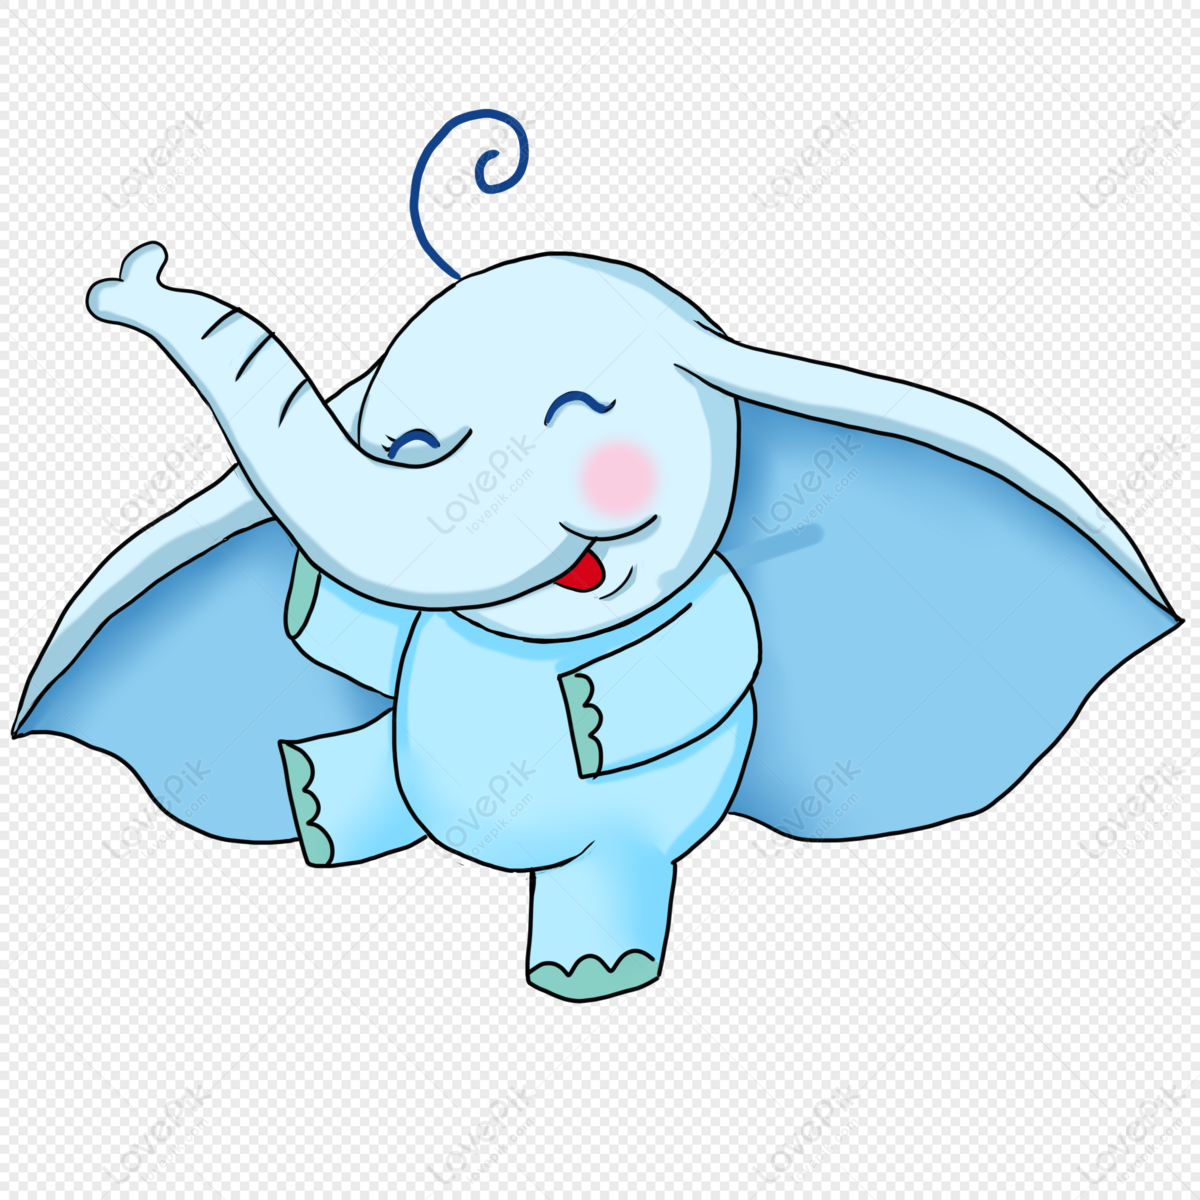 Happy elephant cartoon stock vector. Illustration of childhood - 49398584